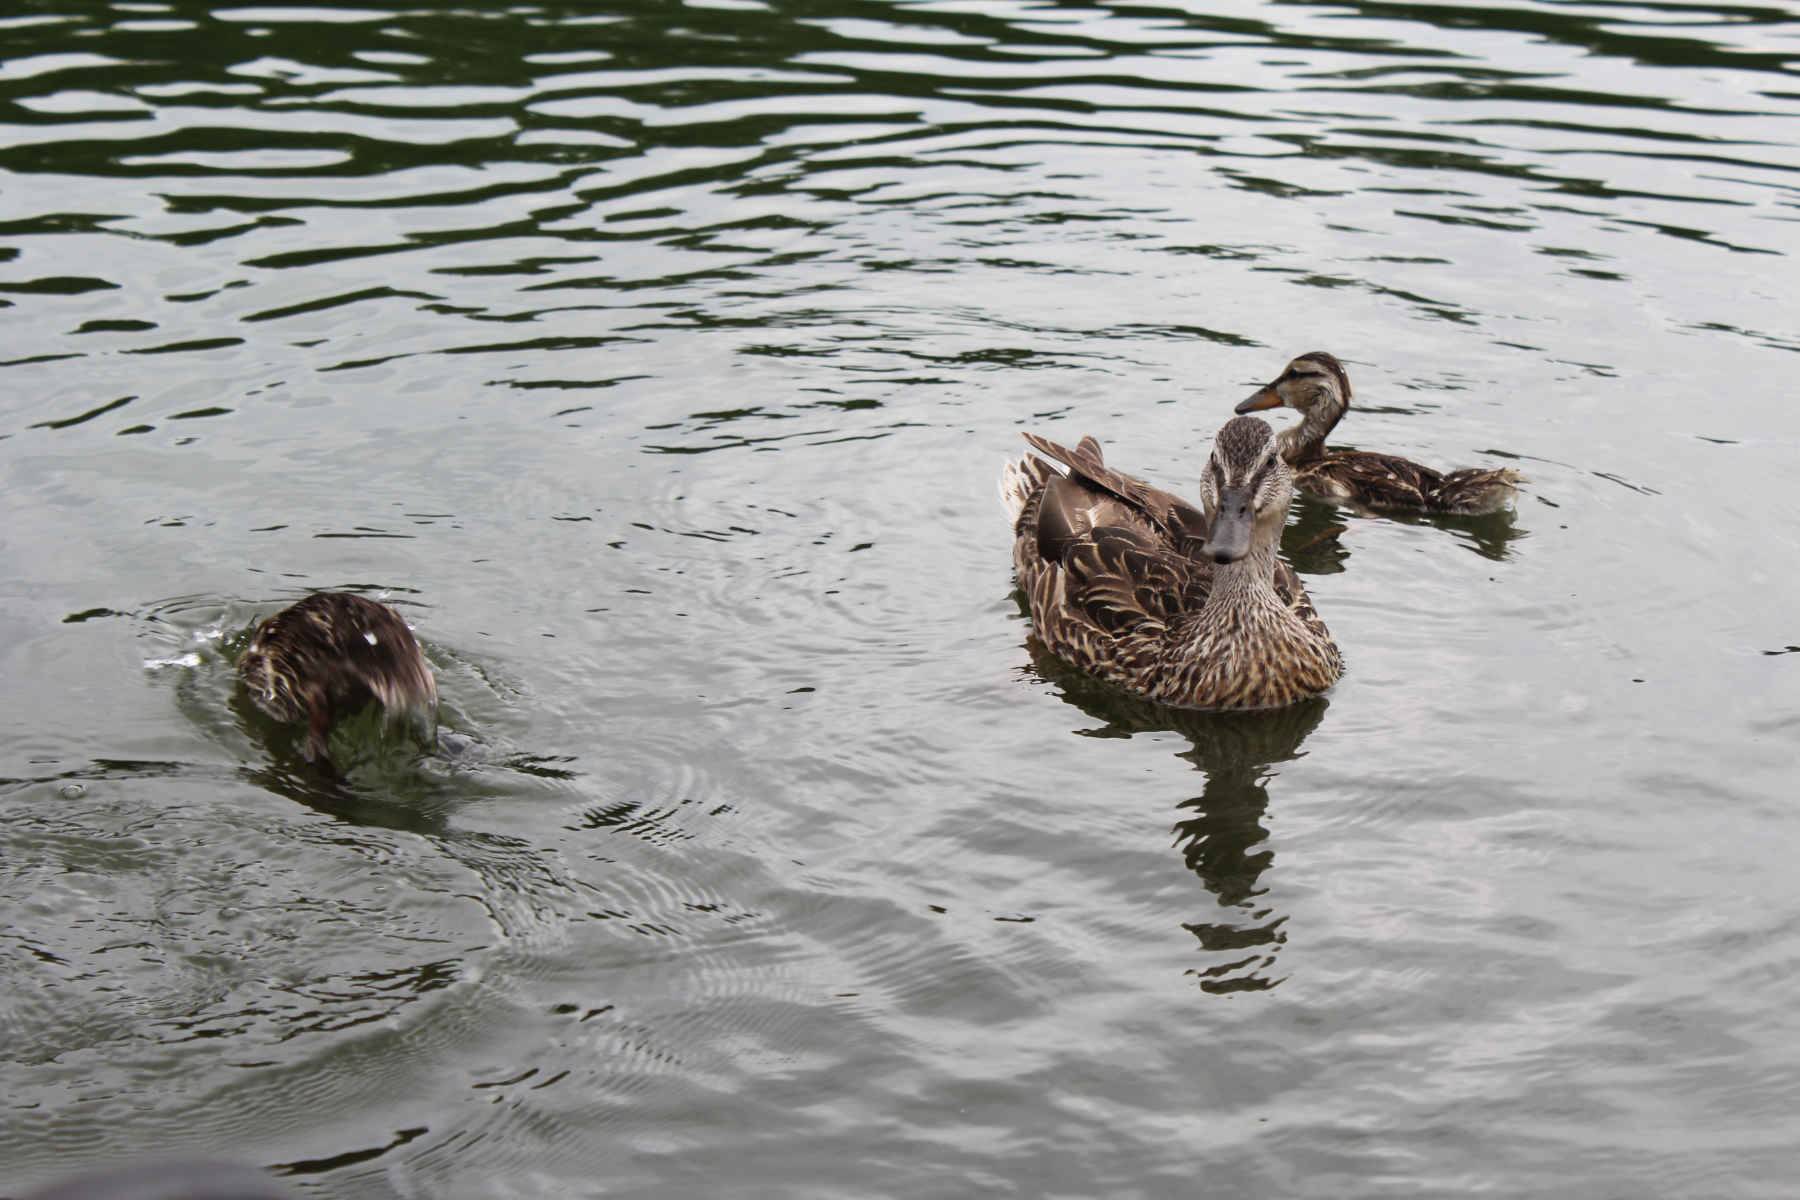 Ducks in the reflecting pool